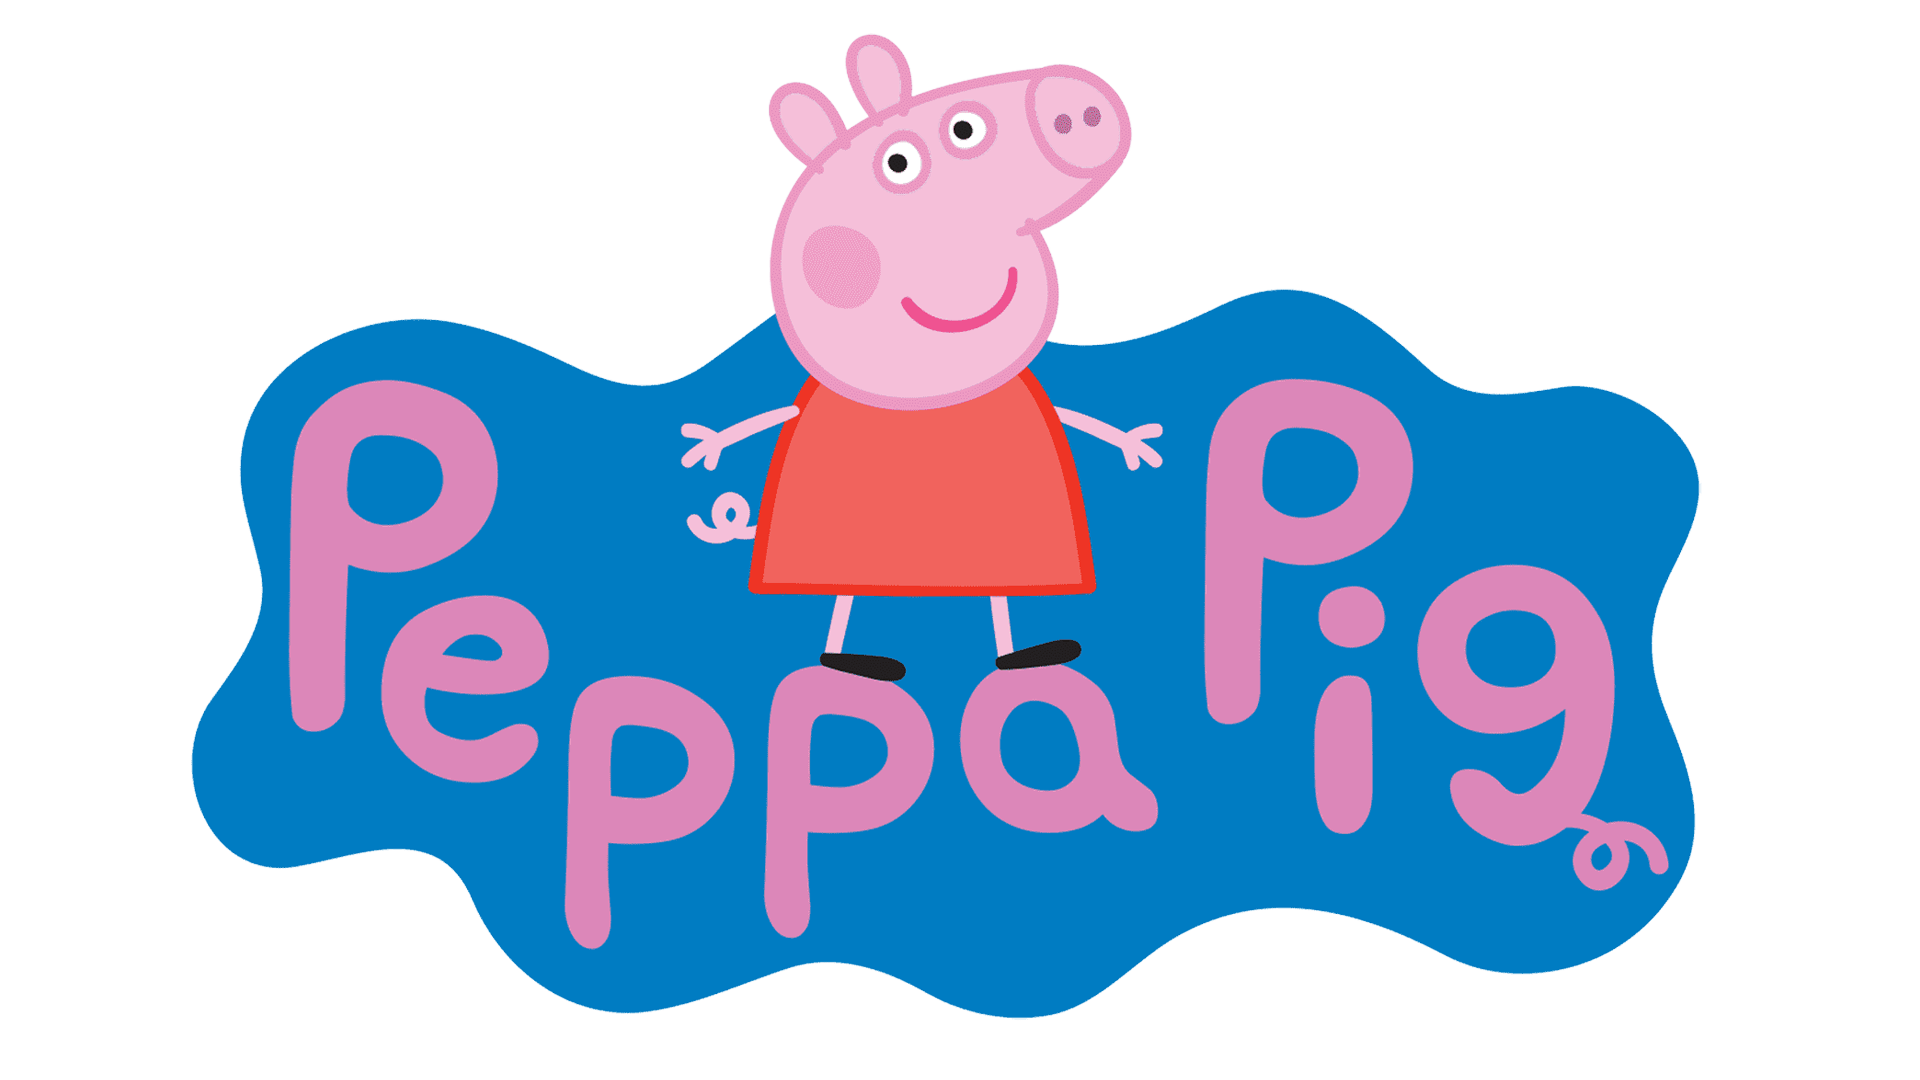 Marque: PEPPA PIG